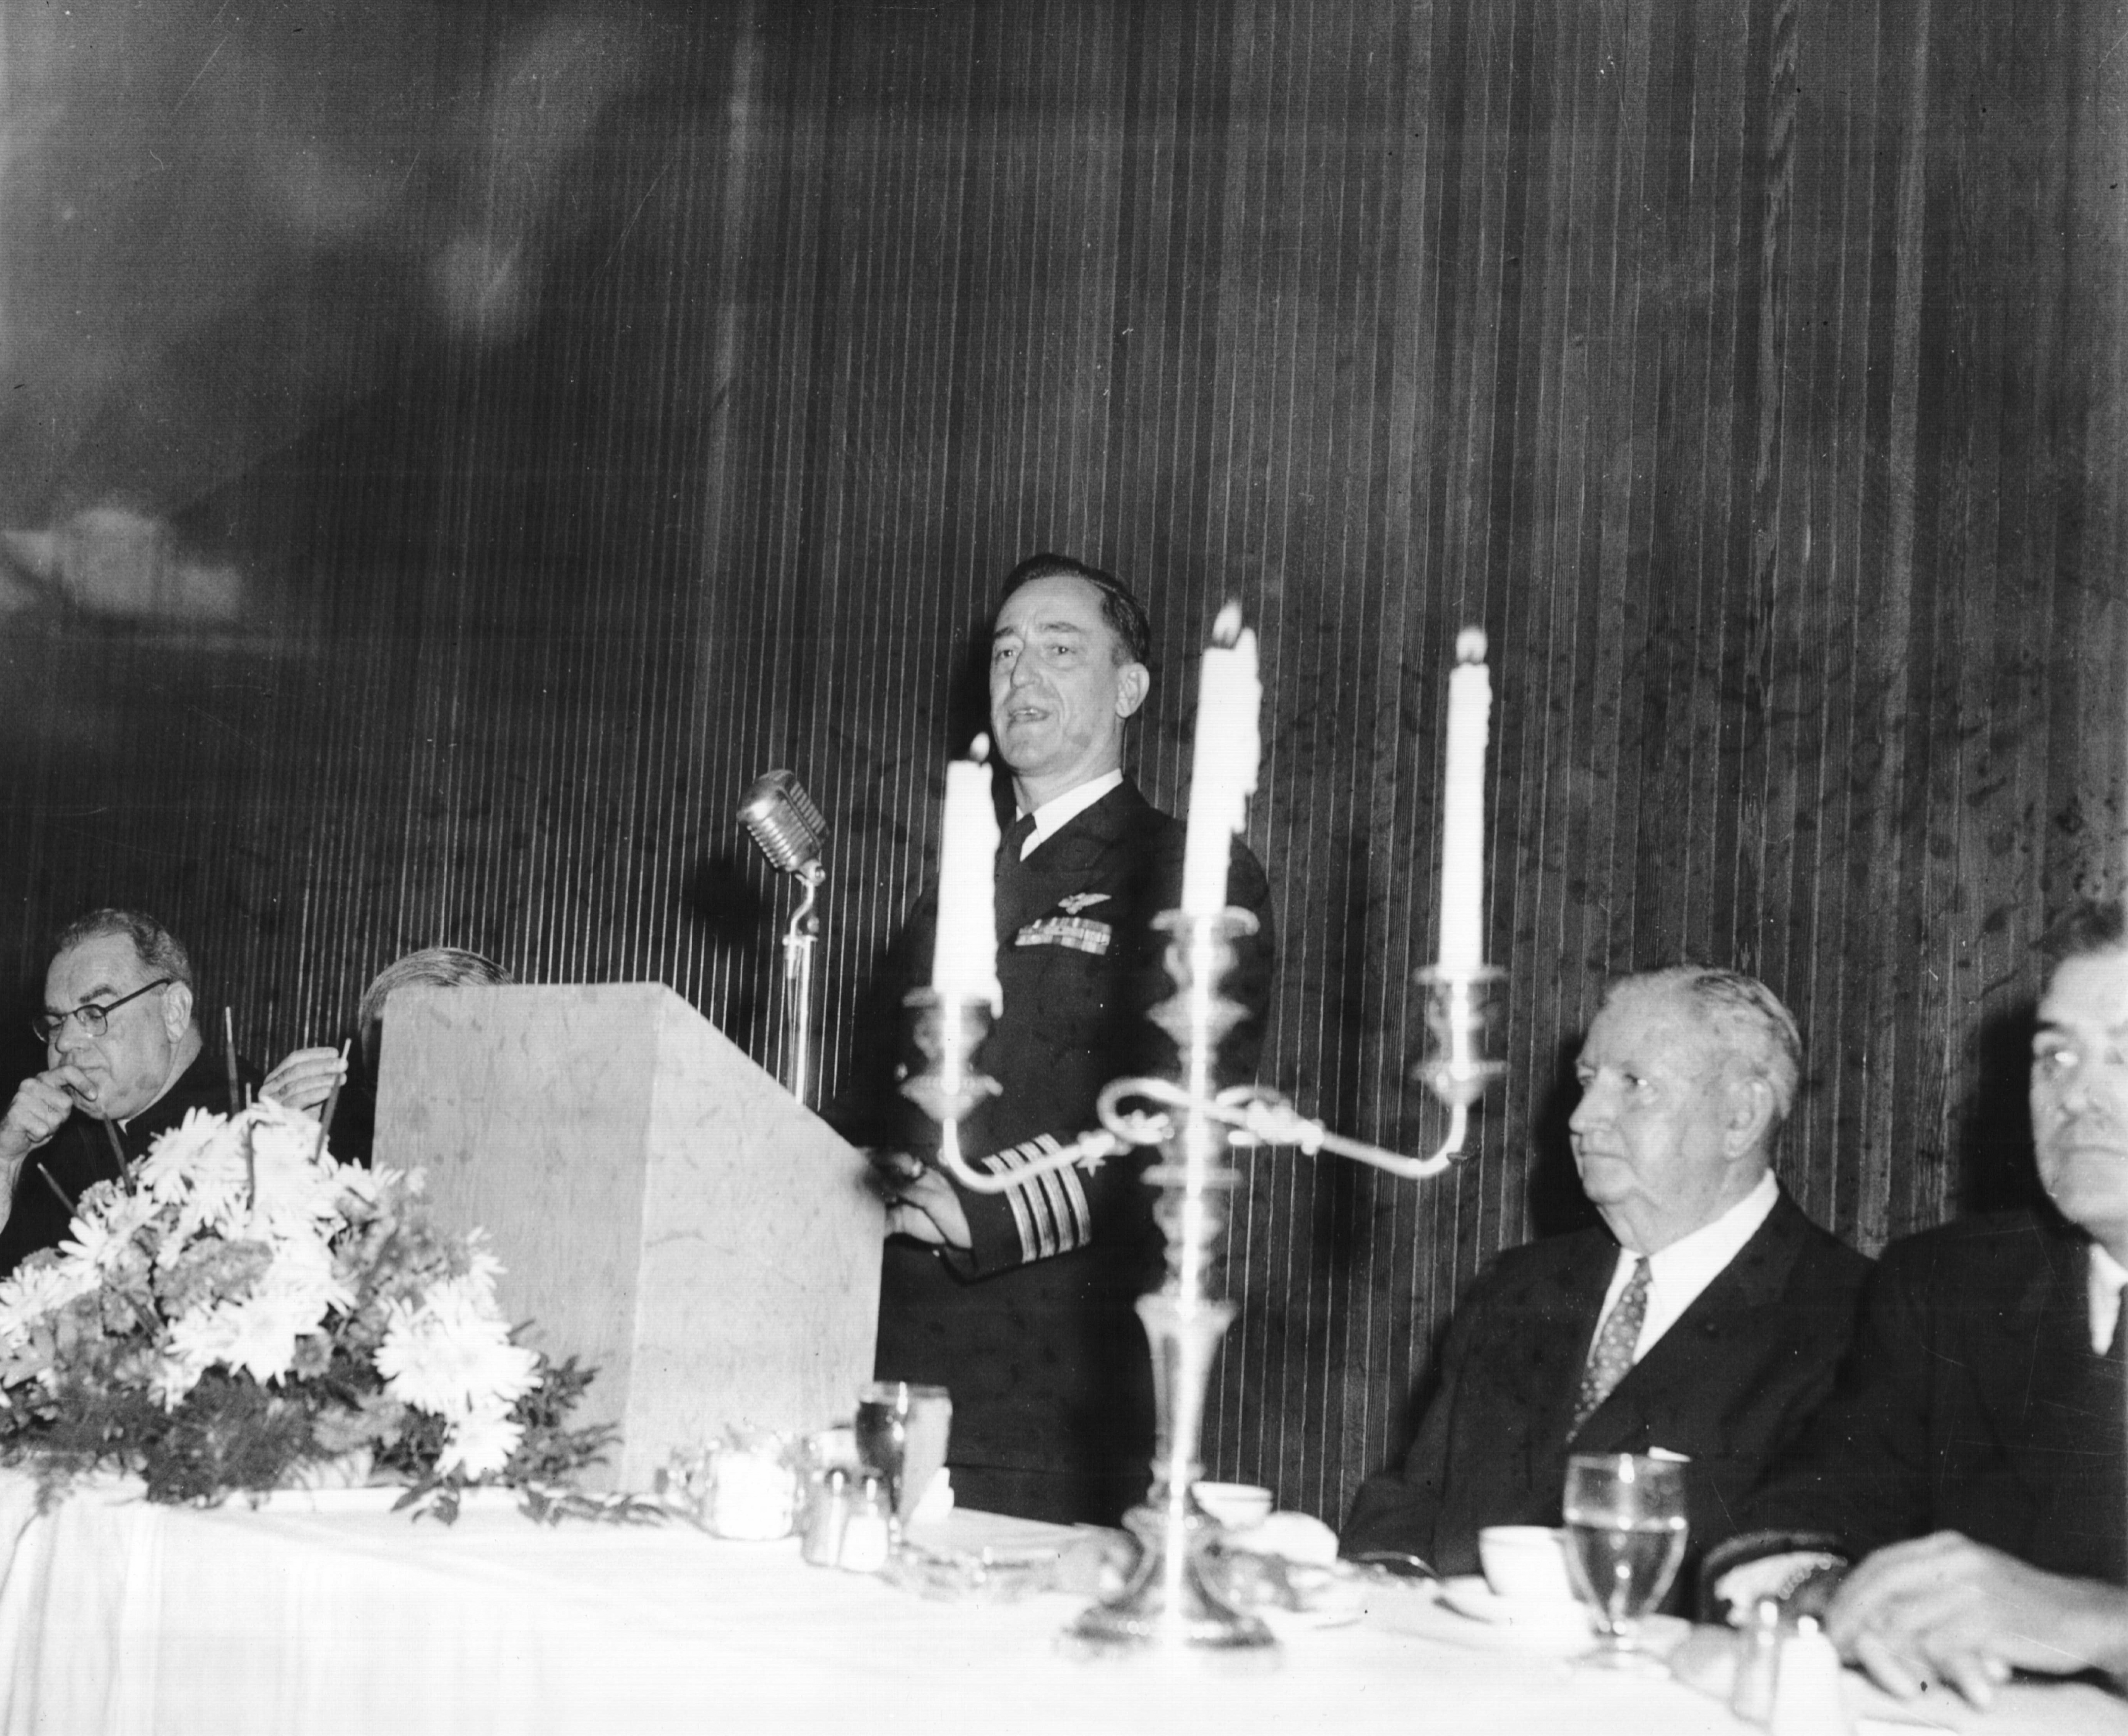 Jack Kleiss speaking at Villanova University, Pennsylvania, United States, 16 Nov 1957